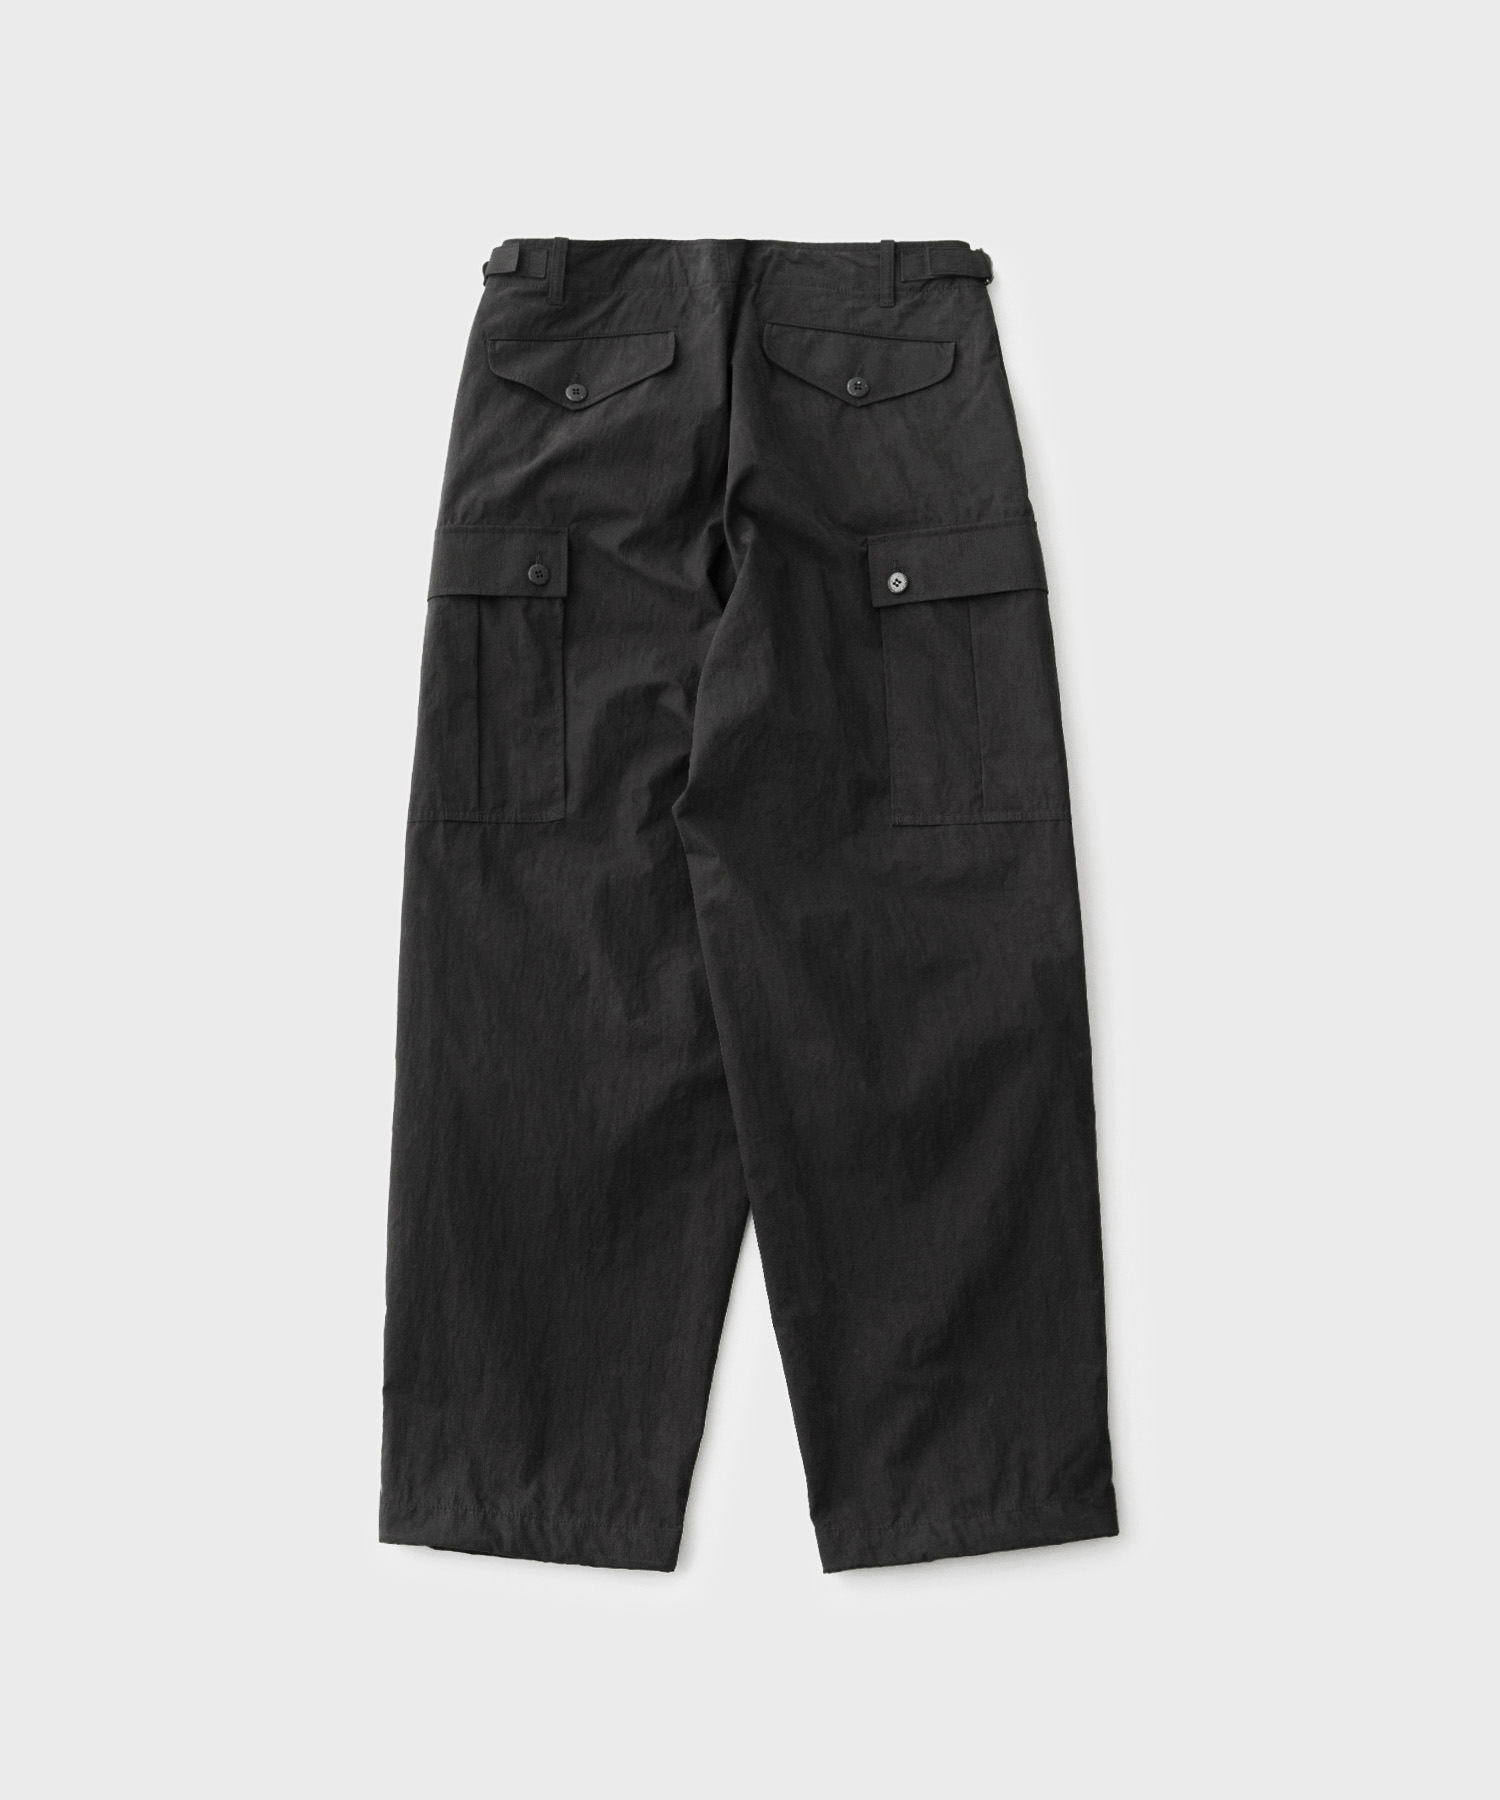 M51 Field Pants (Almost Black)